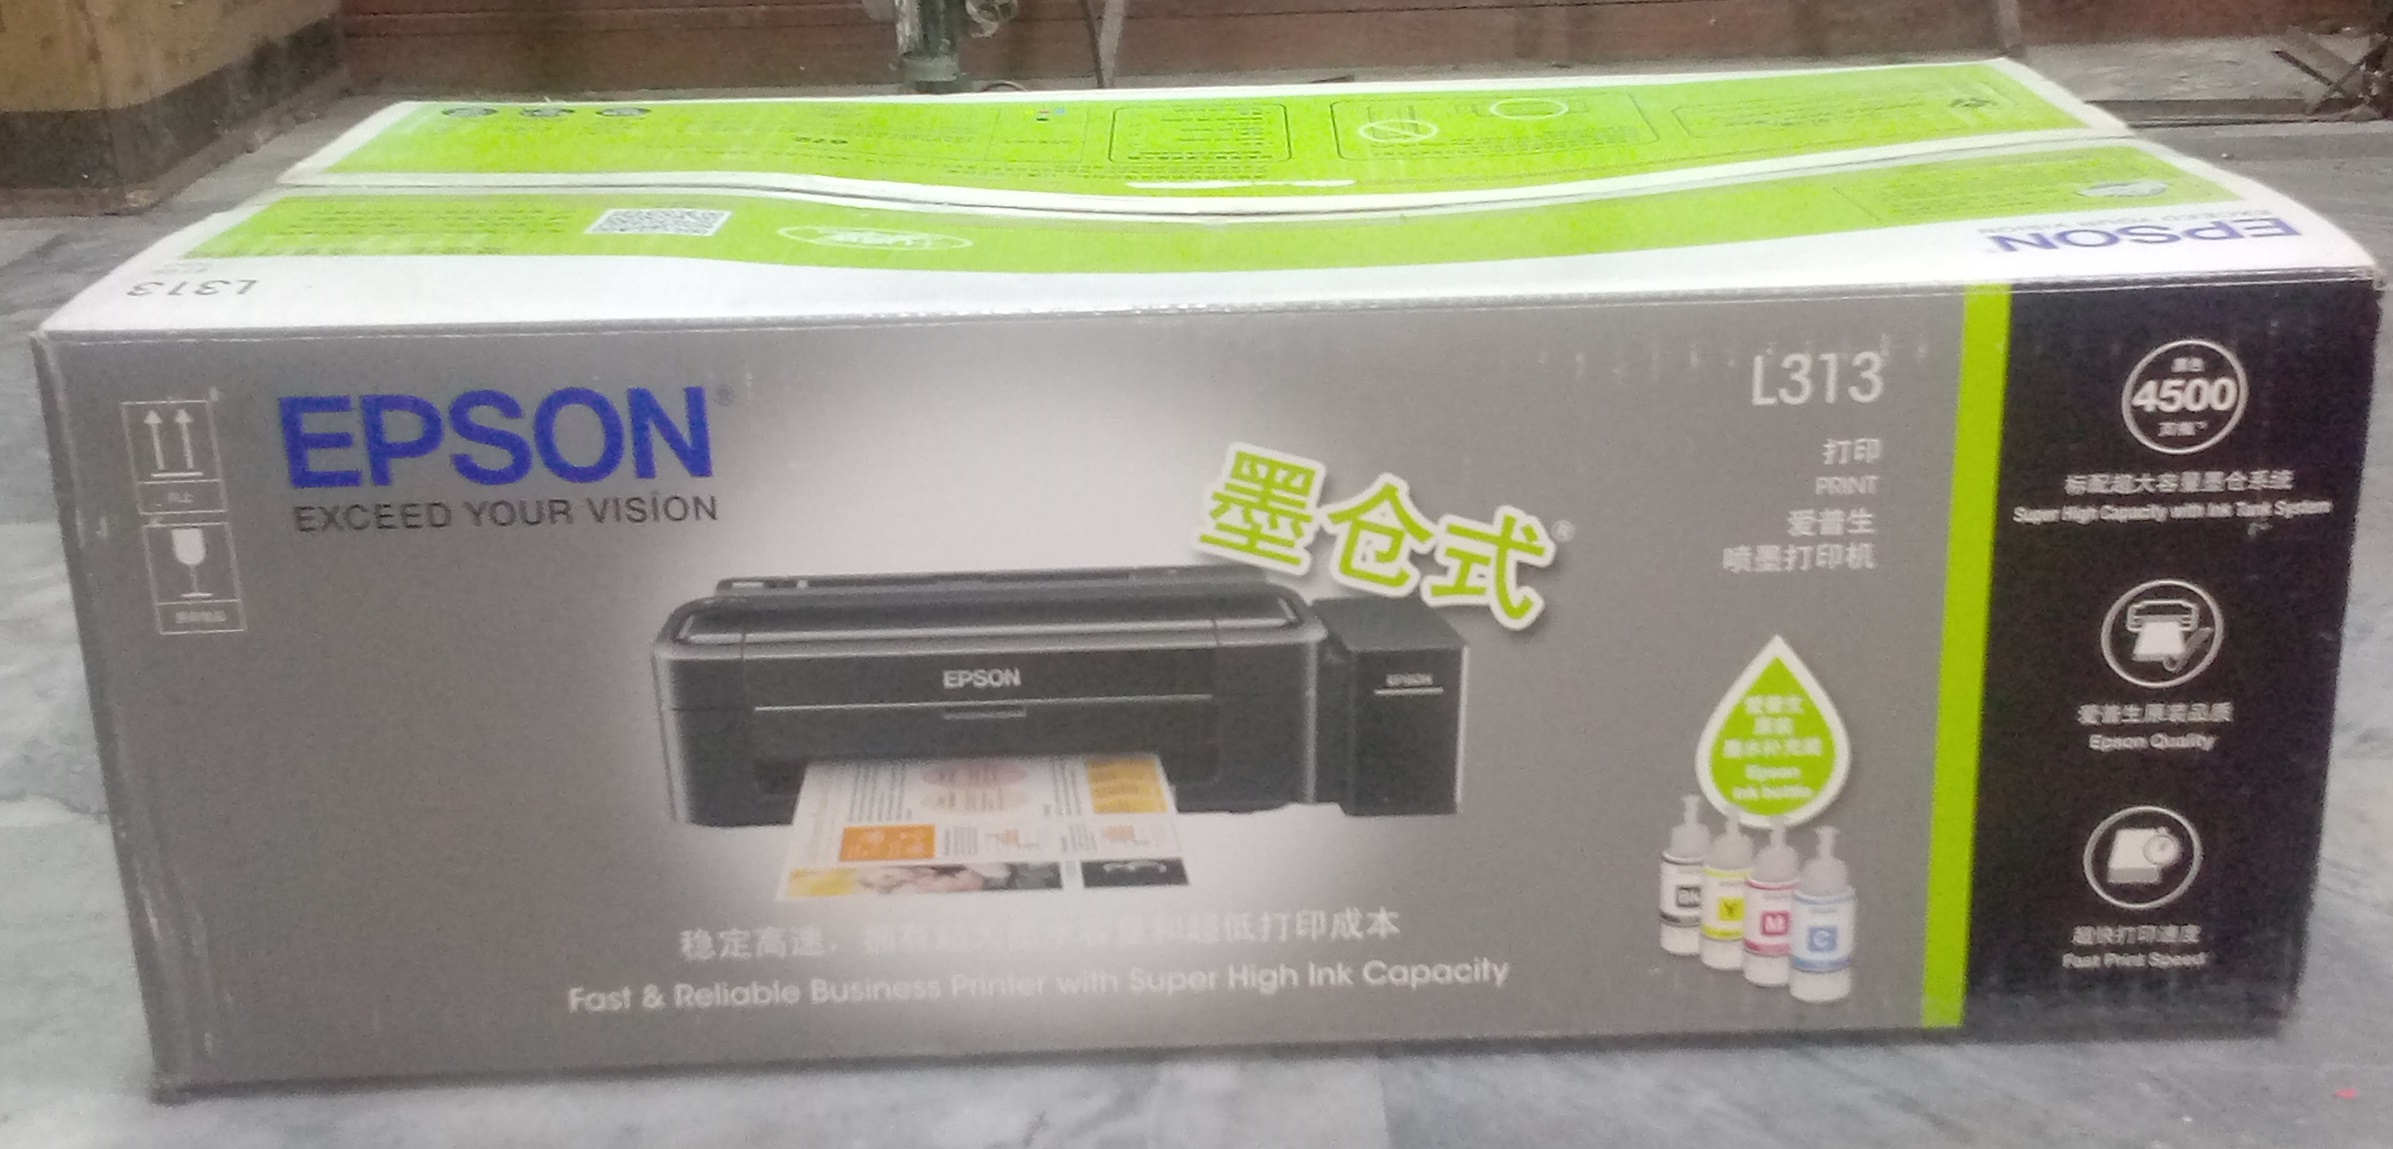 Epson L313 Printer.